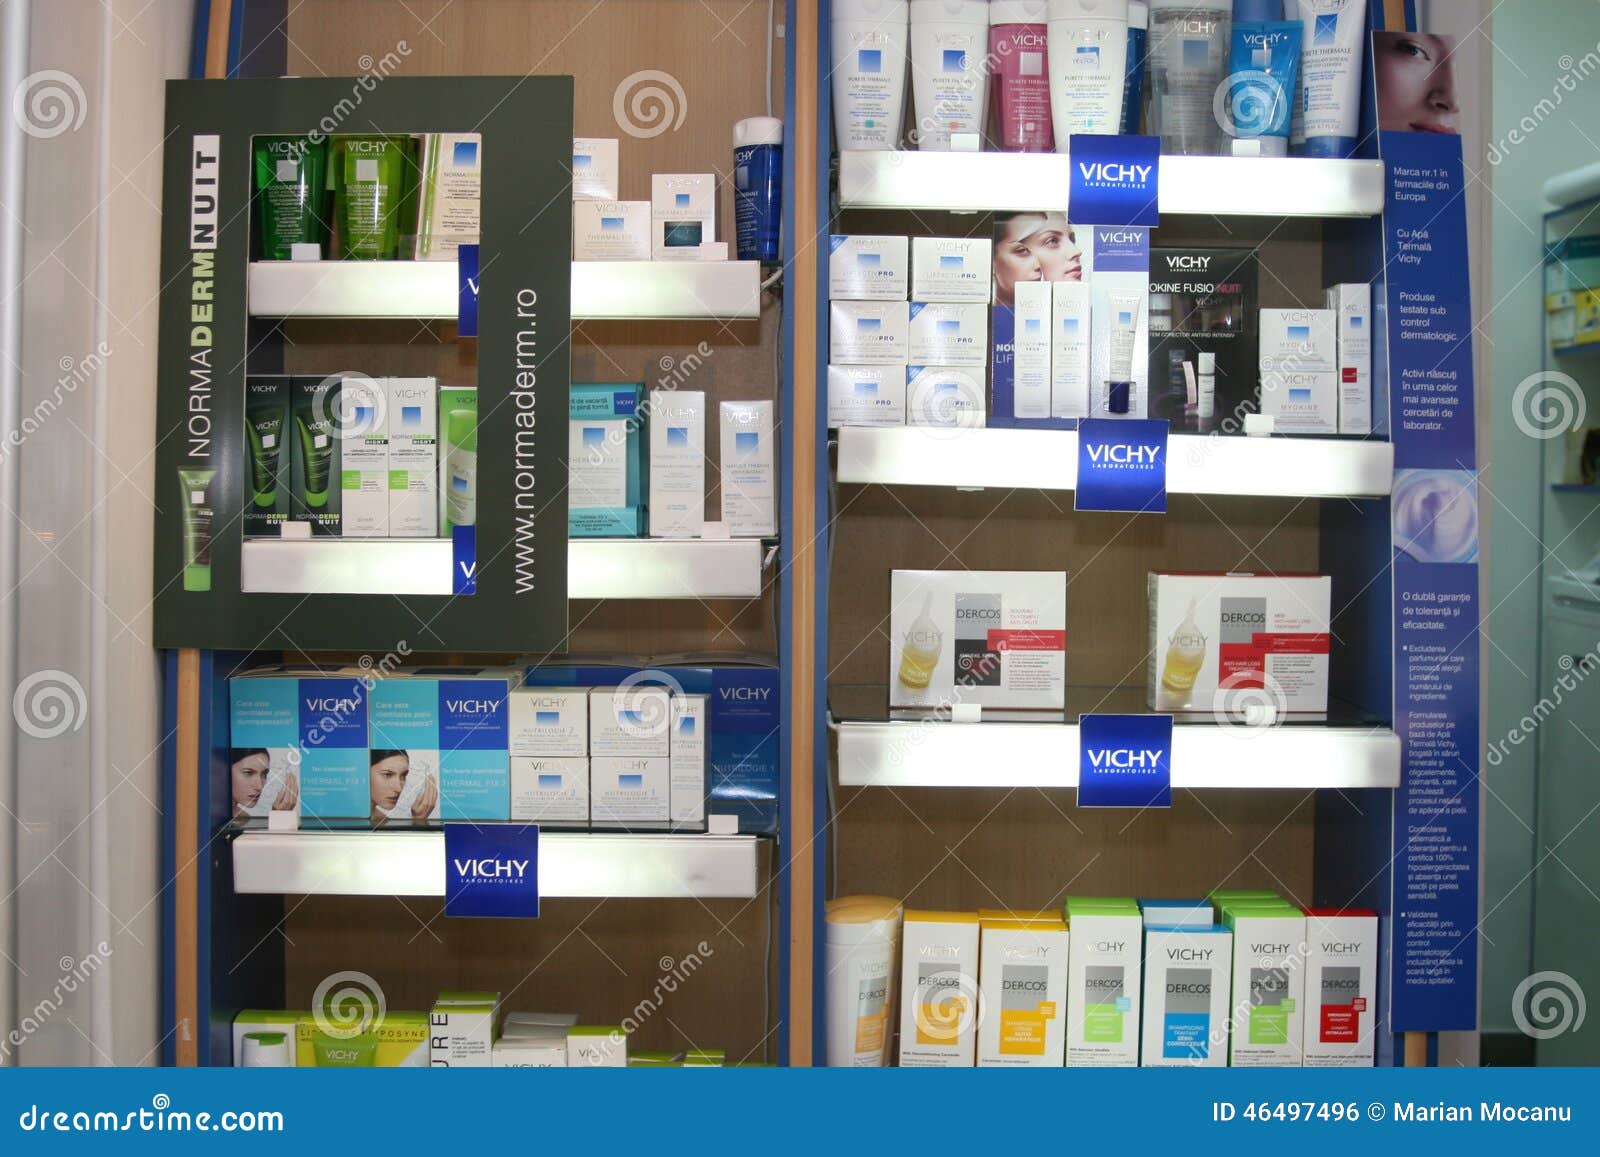 Pharmacy shelves - Stock Image - M640/0280 - Science Photo Library